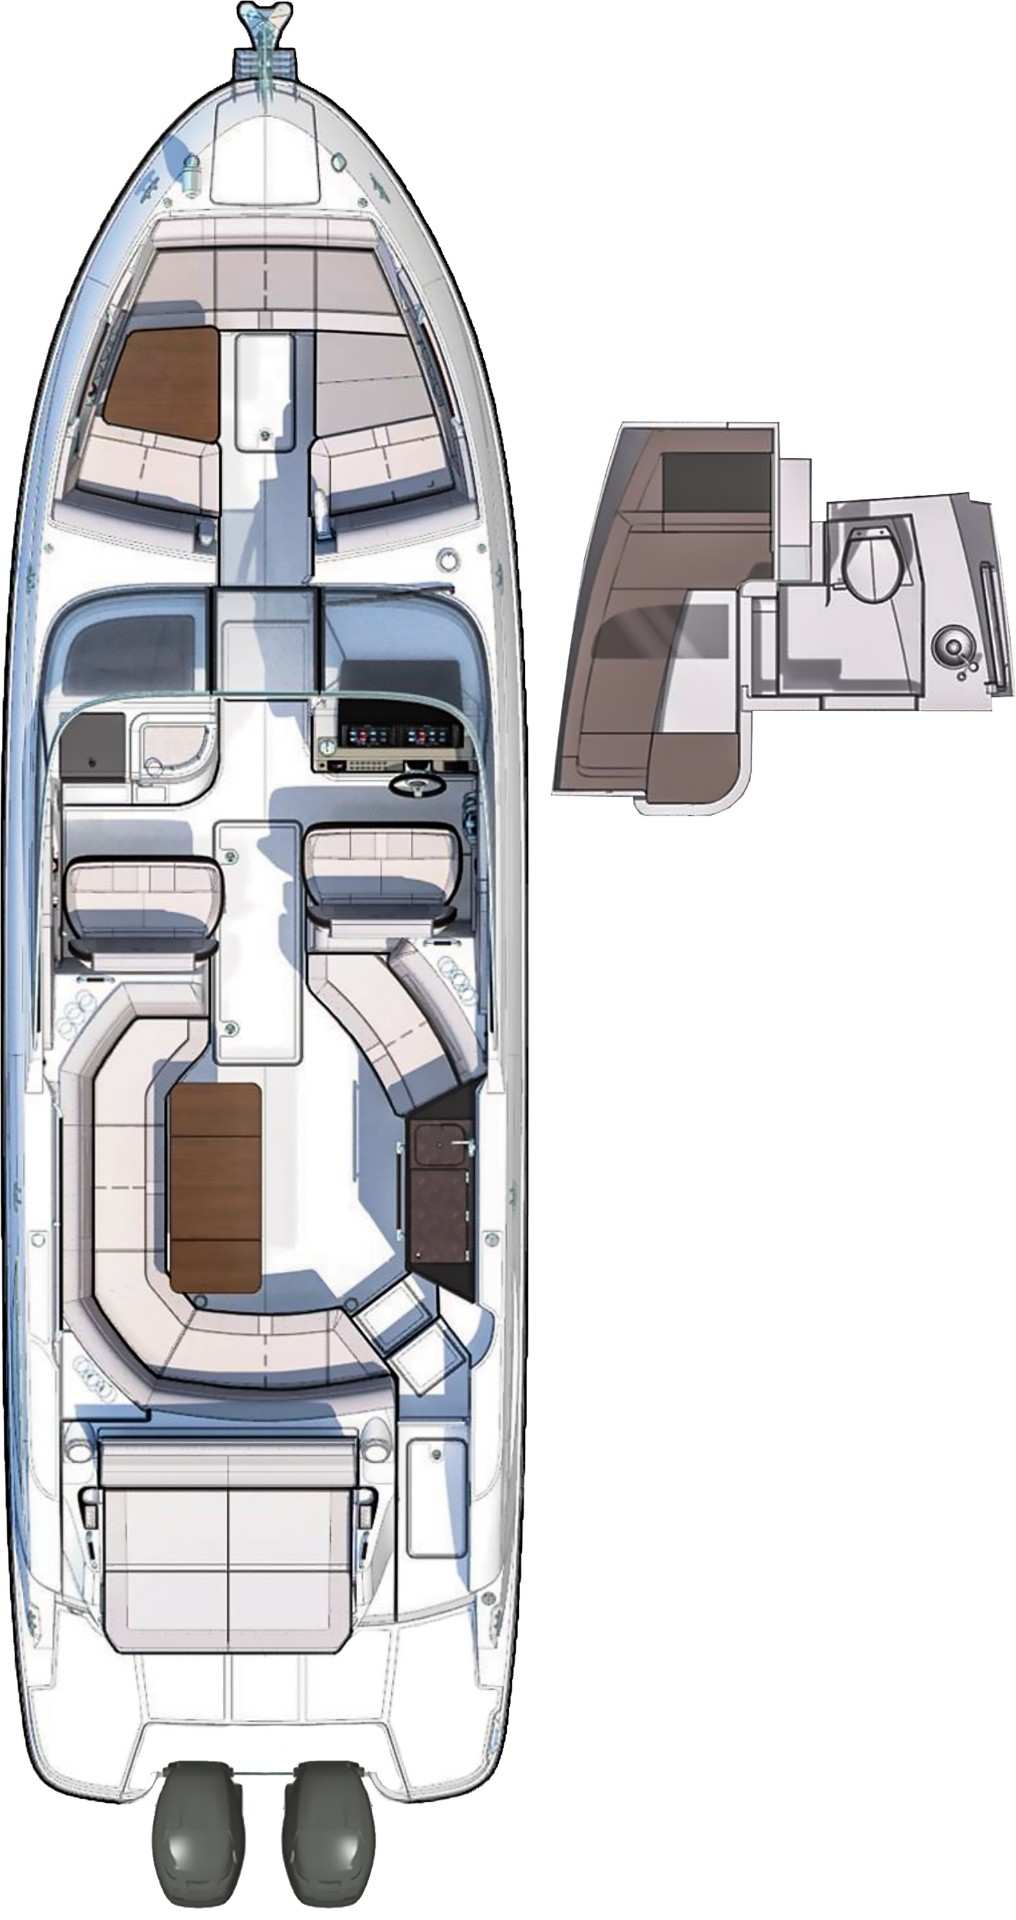 SLX 350 Outboard floor plan